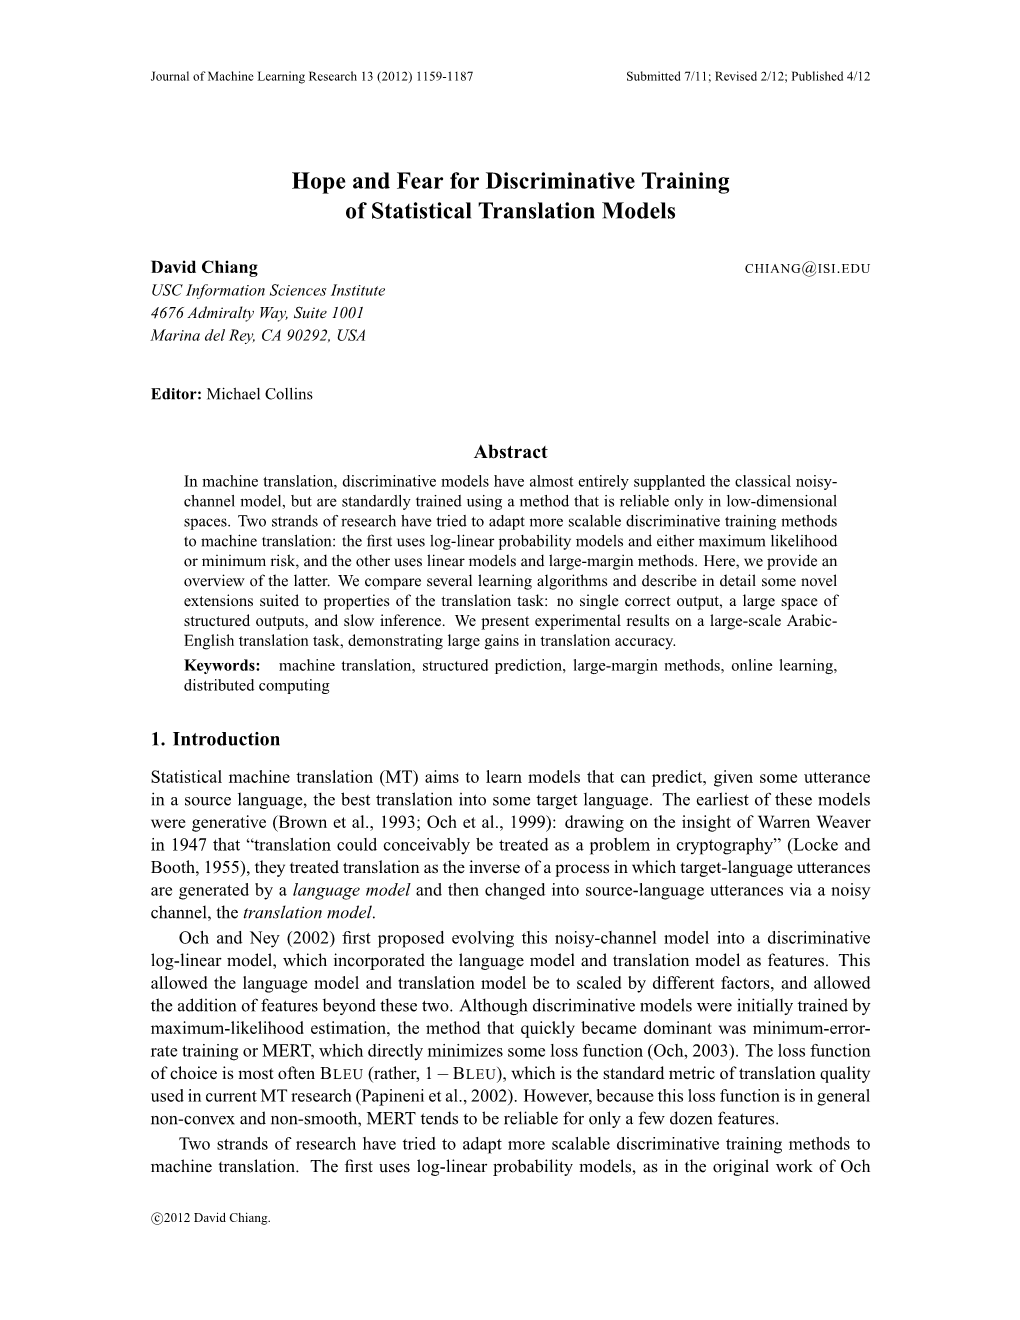 Hope and Fear for Discriminative Training of Statistical Translation Models